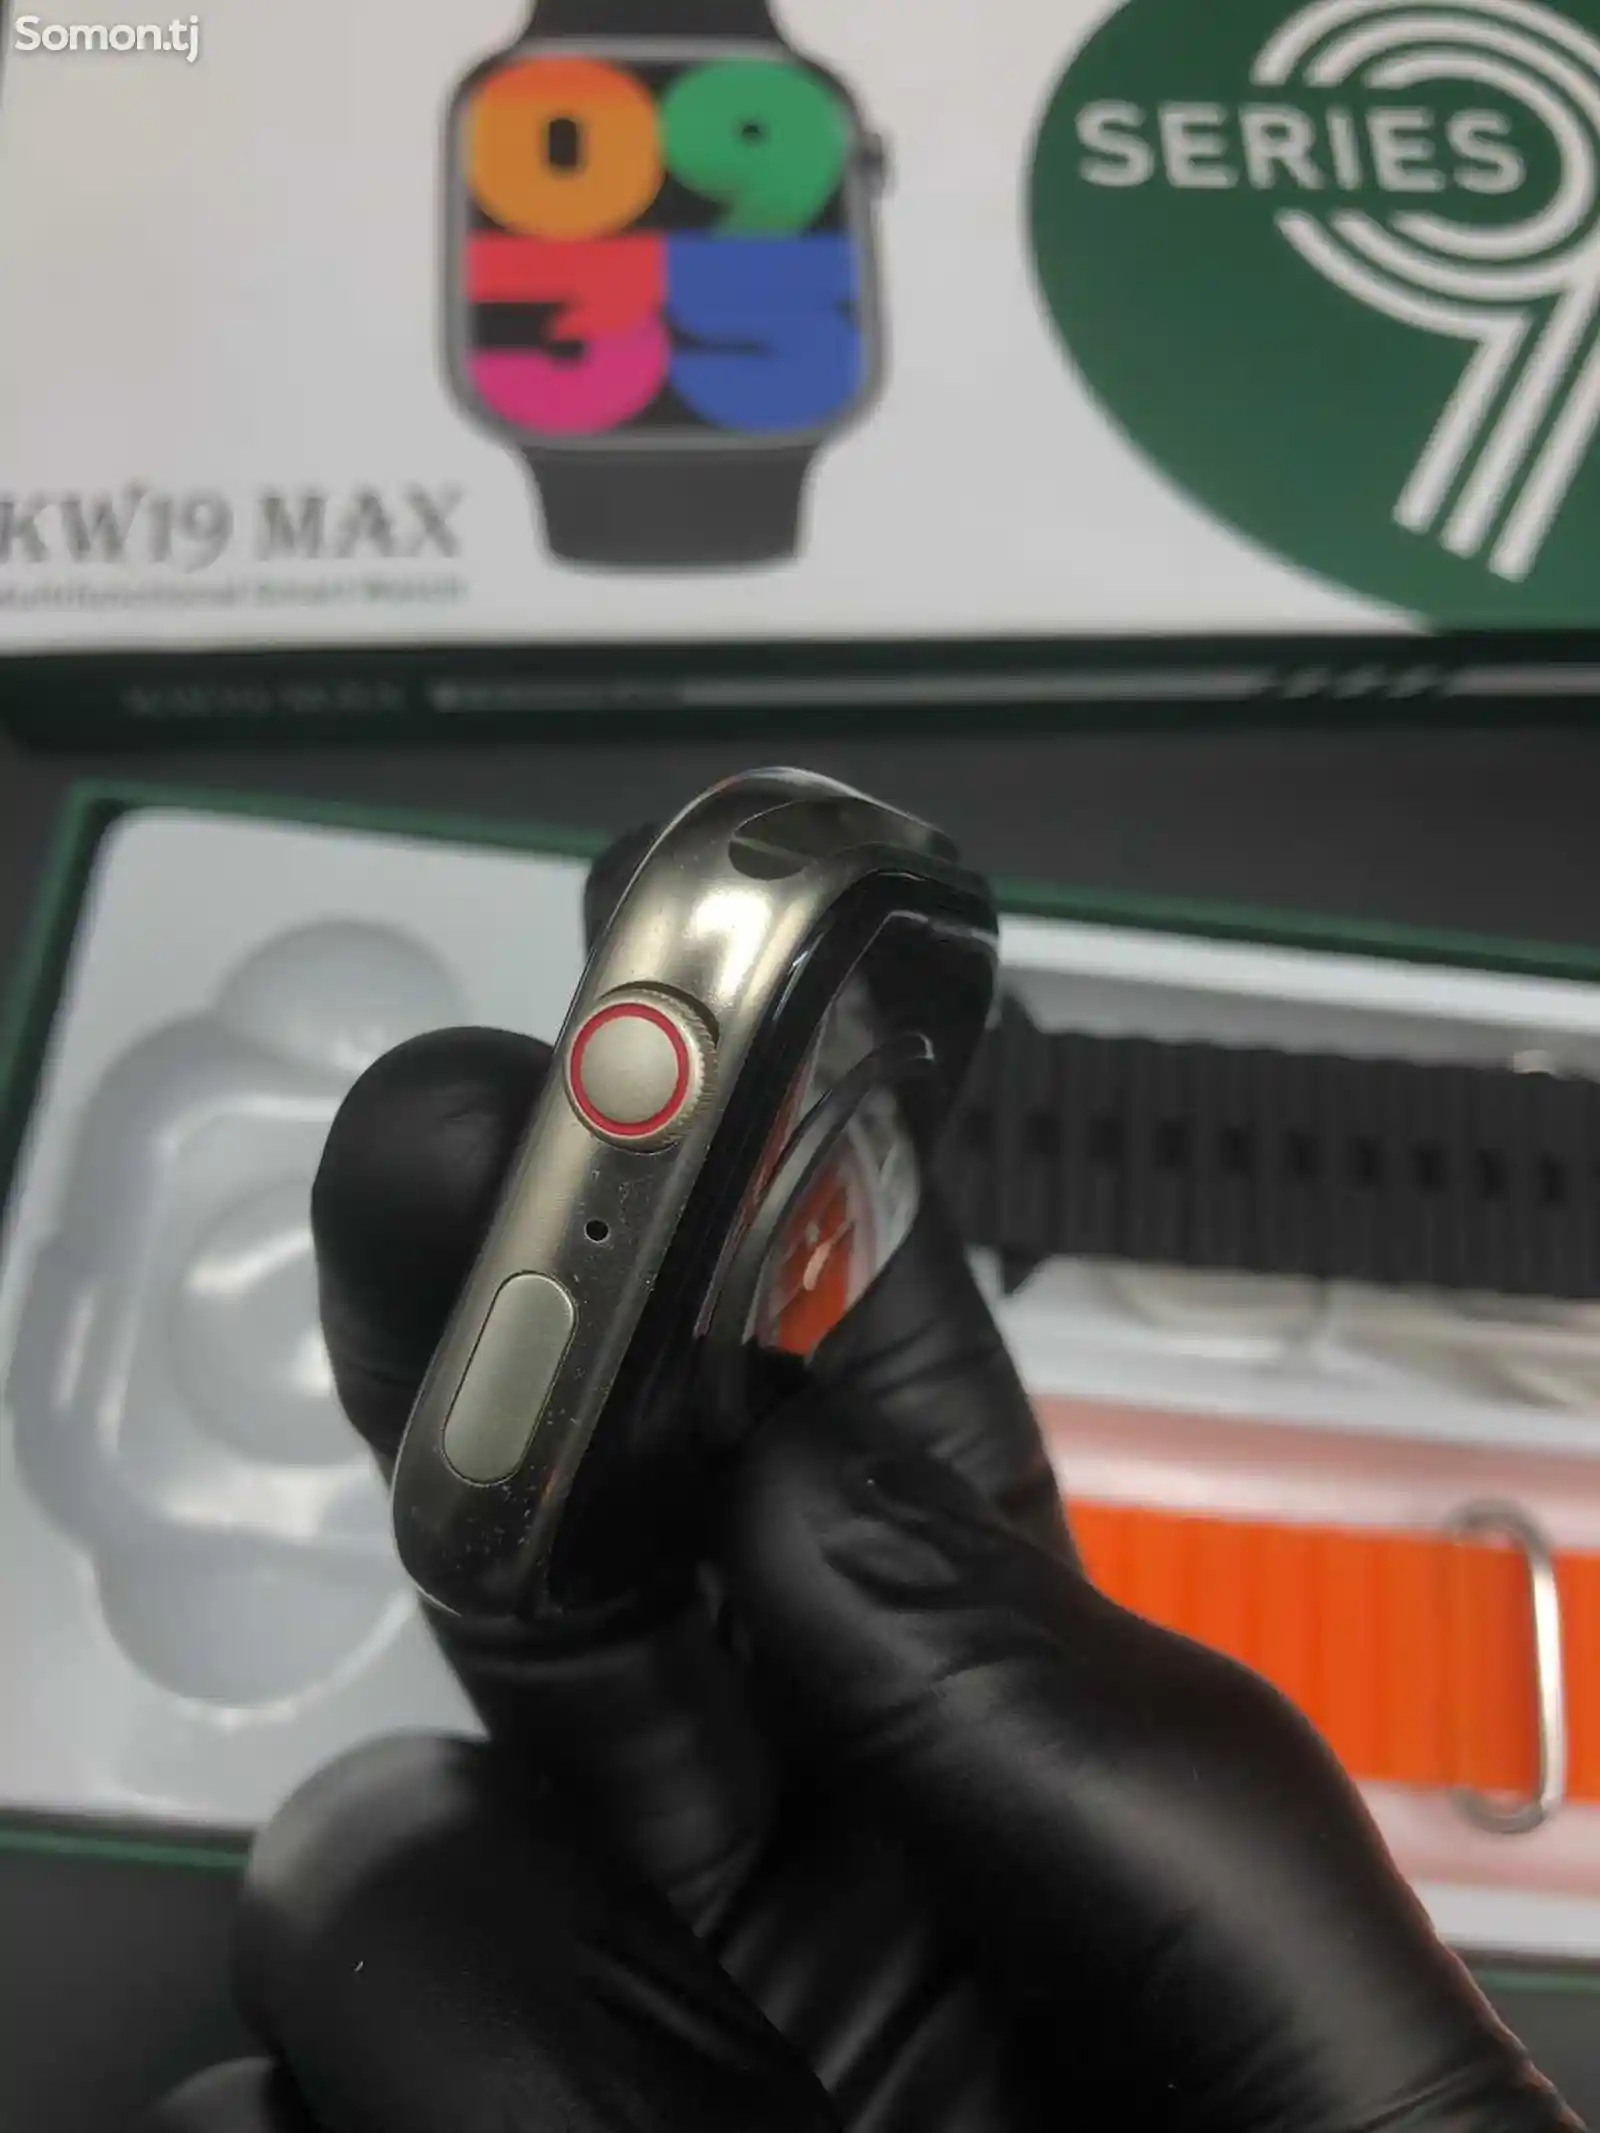 Смарт часы Smart Watch KW19 MAX 9 series-4